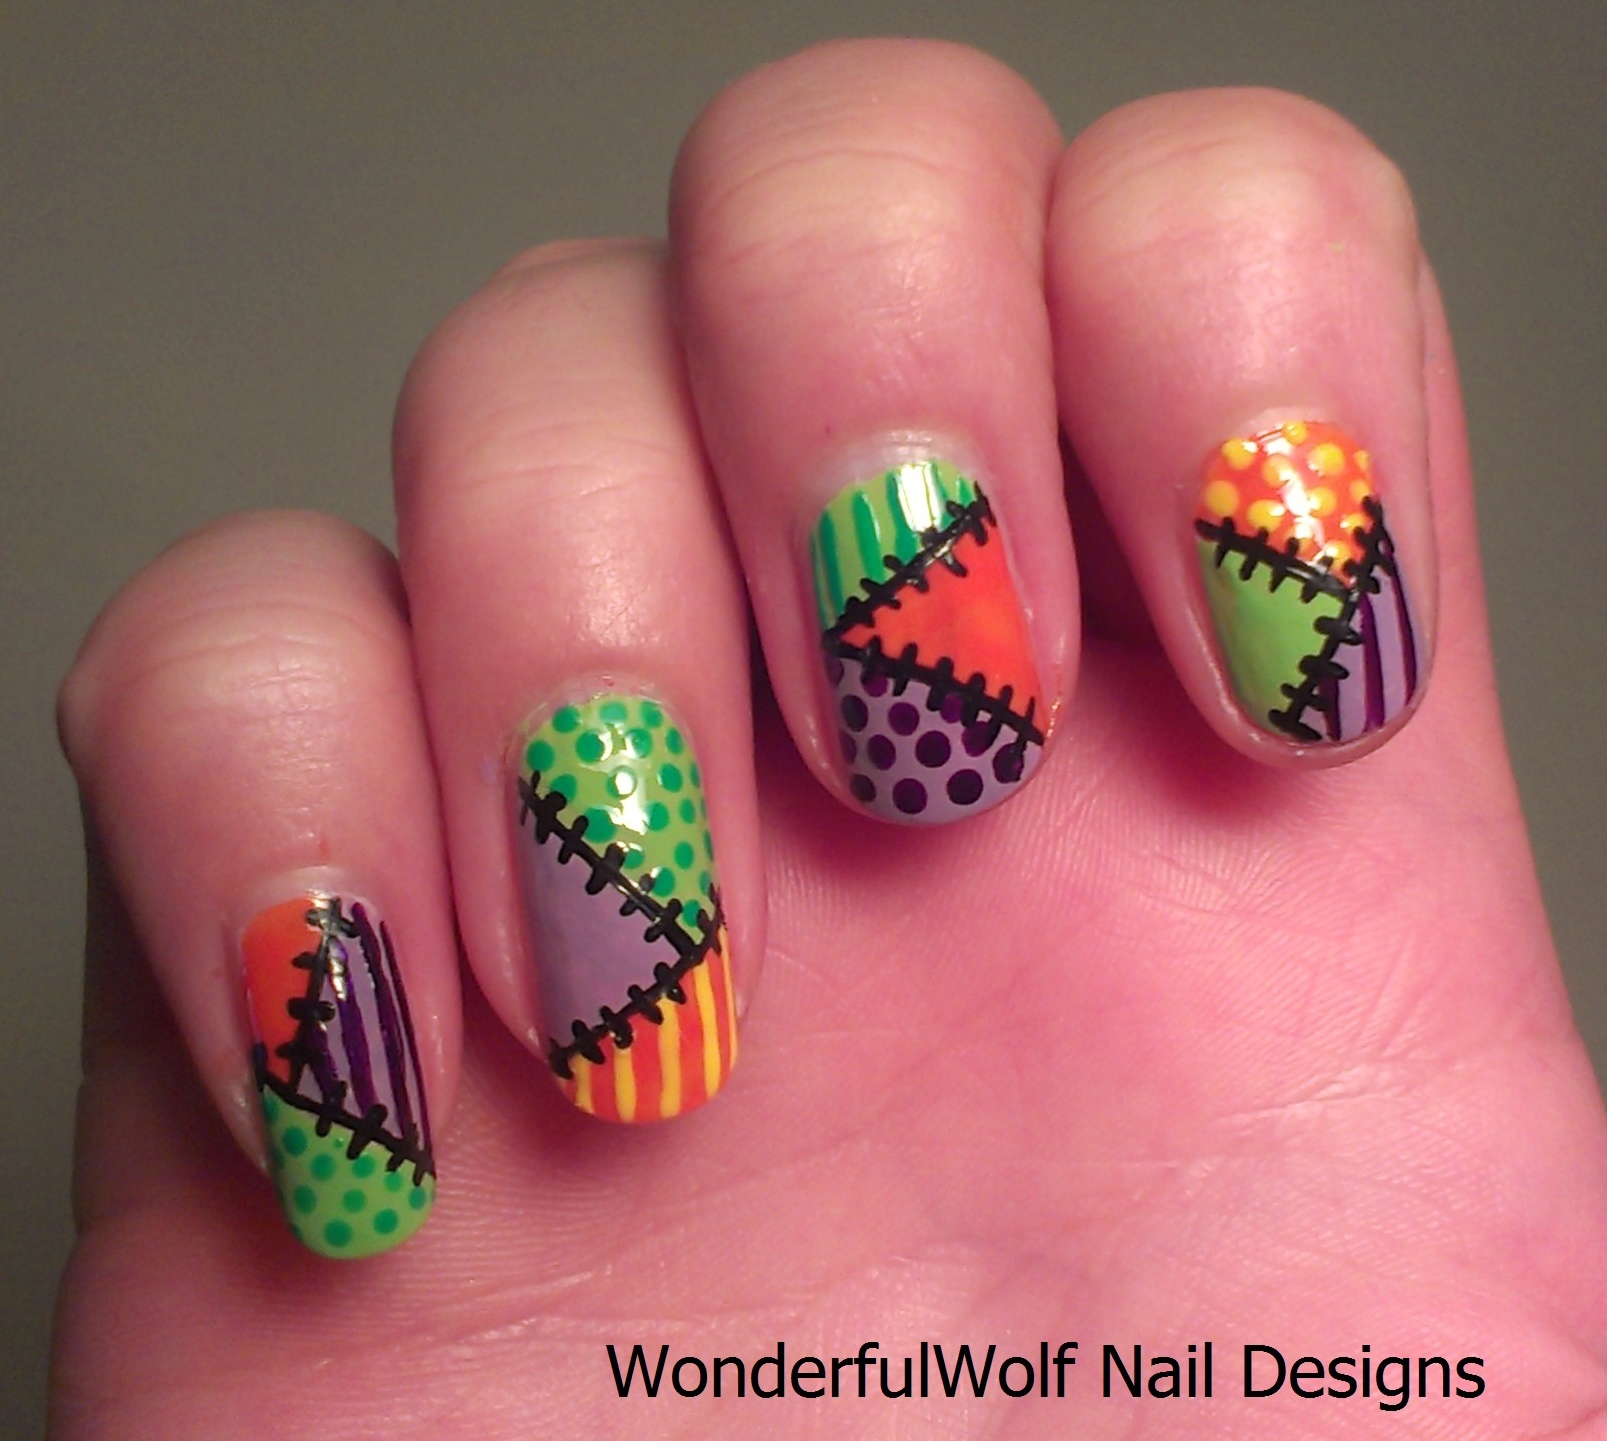 ... Standard posted in wonderfulwolf nail art tagged halloween nail art